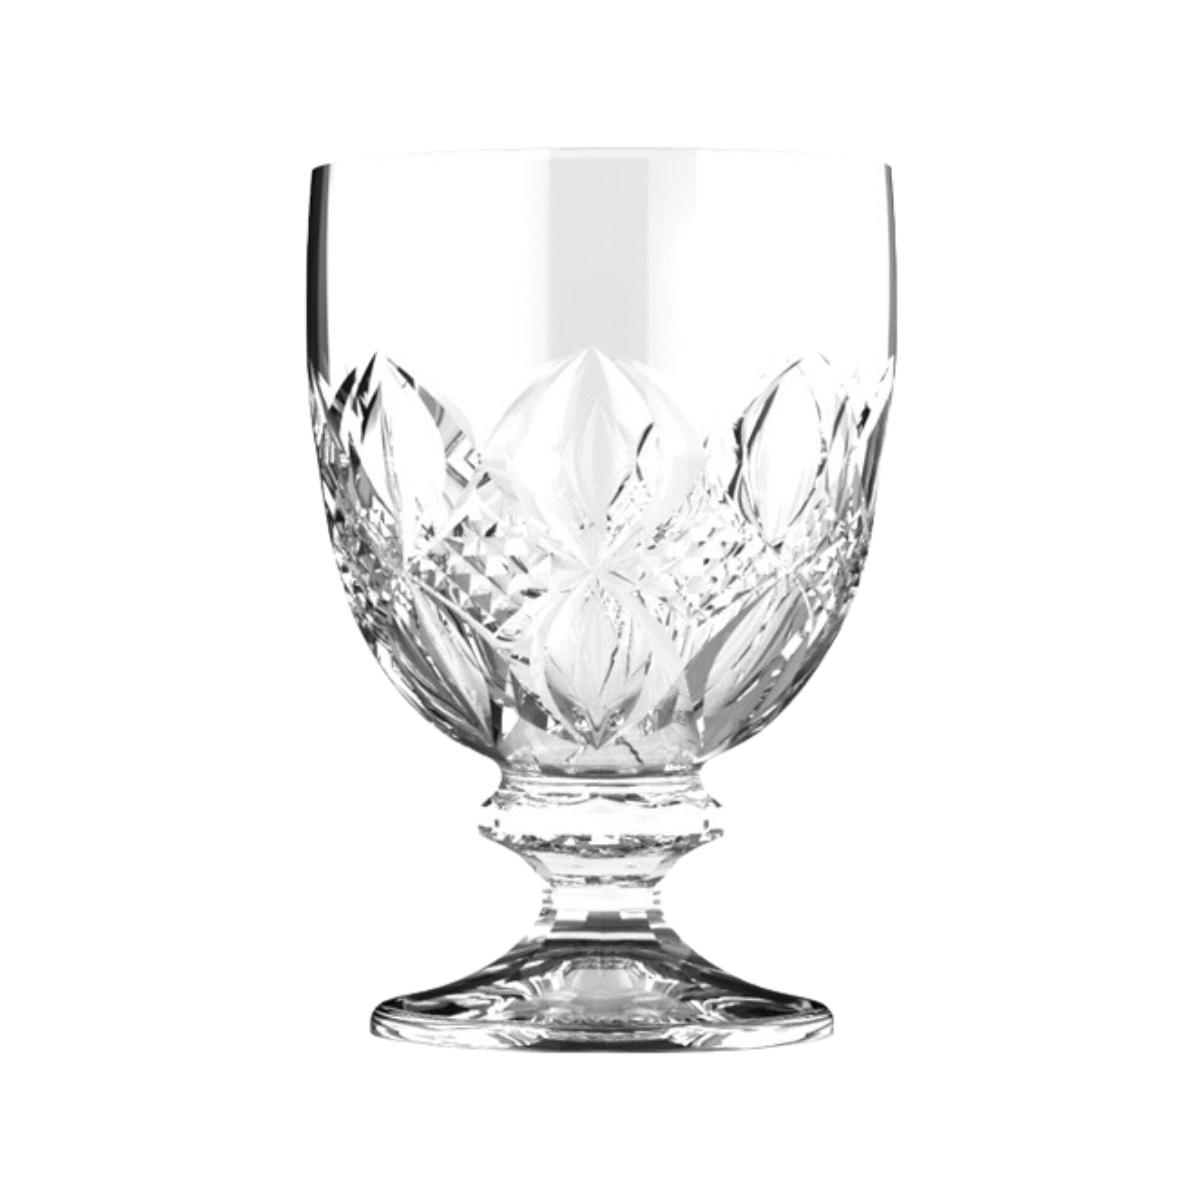 City glass Marbella Stemware 220 ml set of 6 pieces Transparent Glass